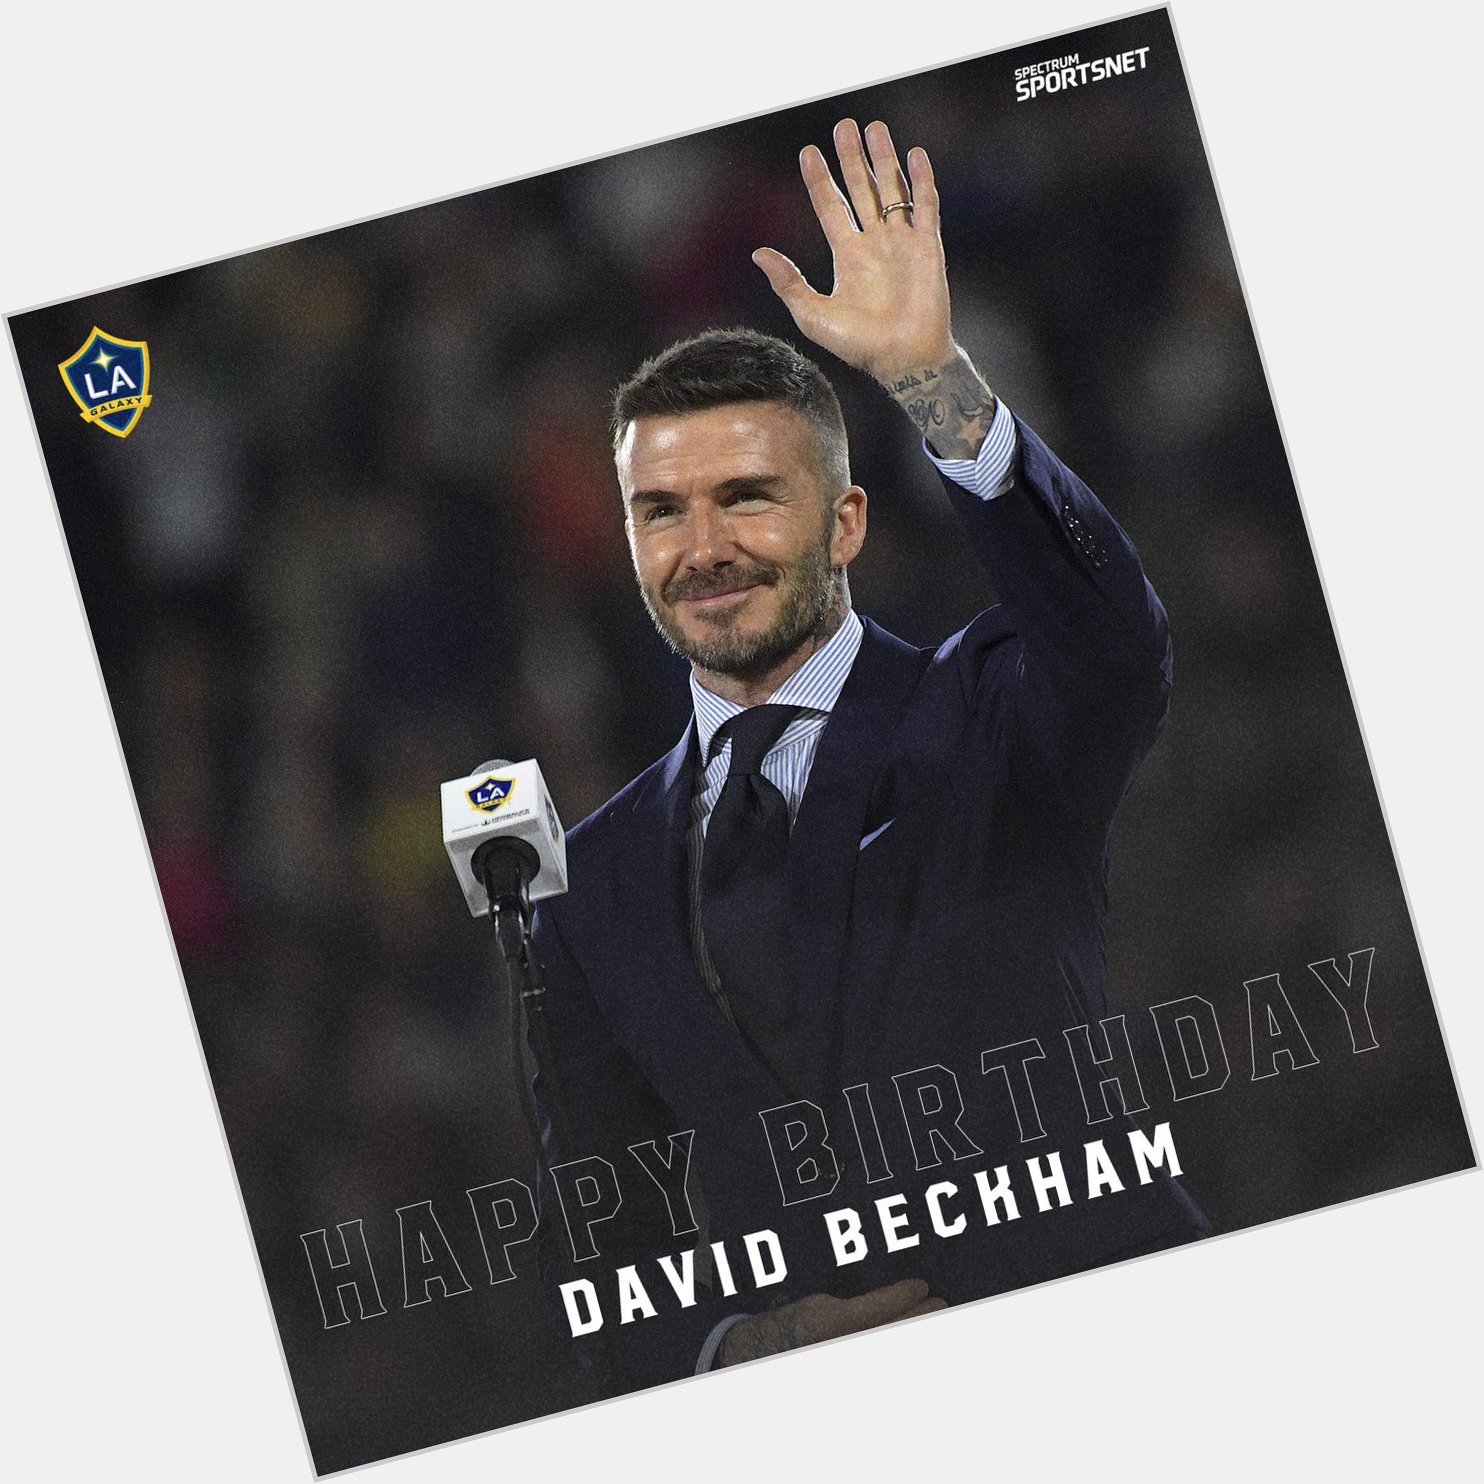 44 never looked so good. 
Happy Birthday to great, David Beckham! 